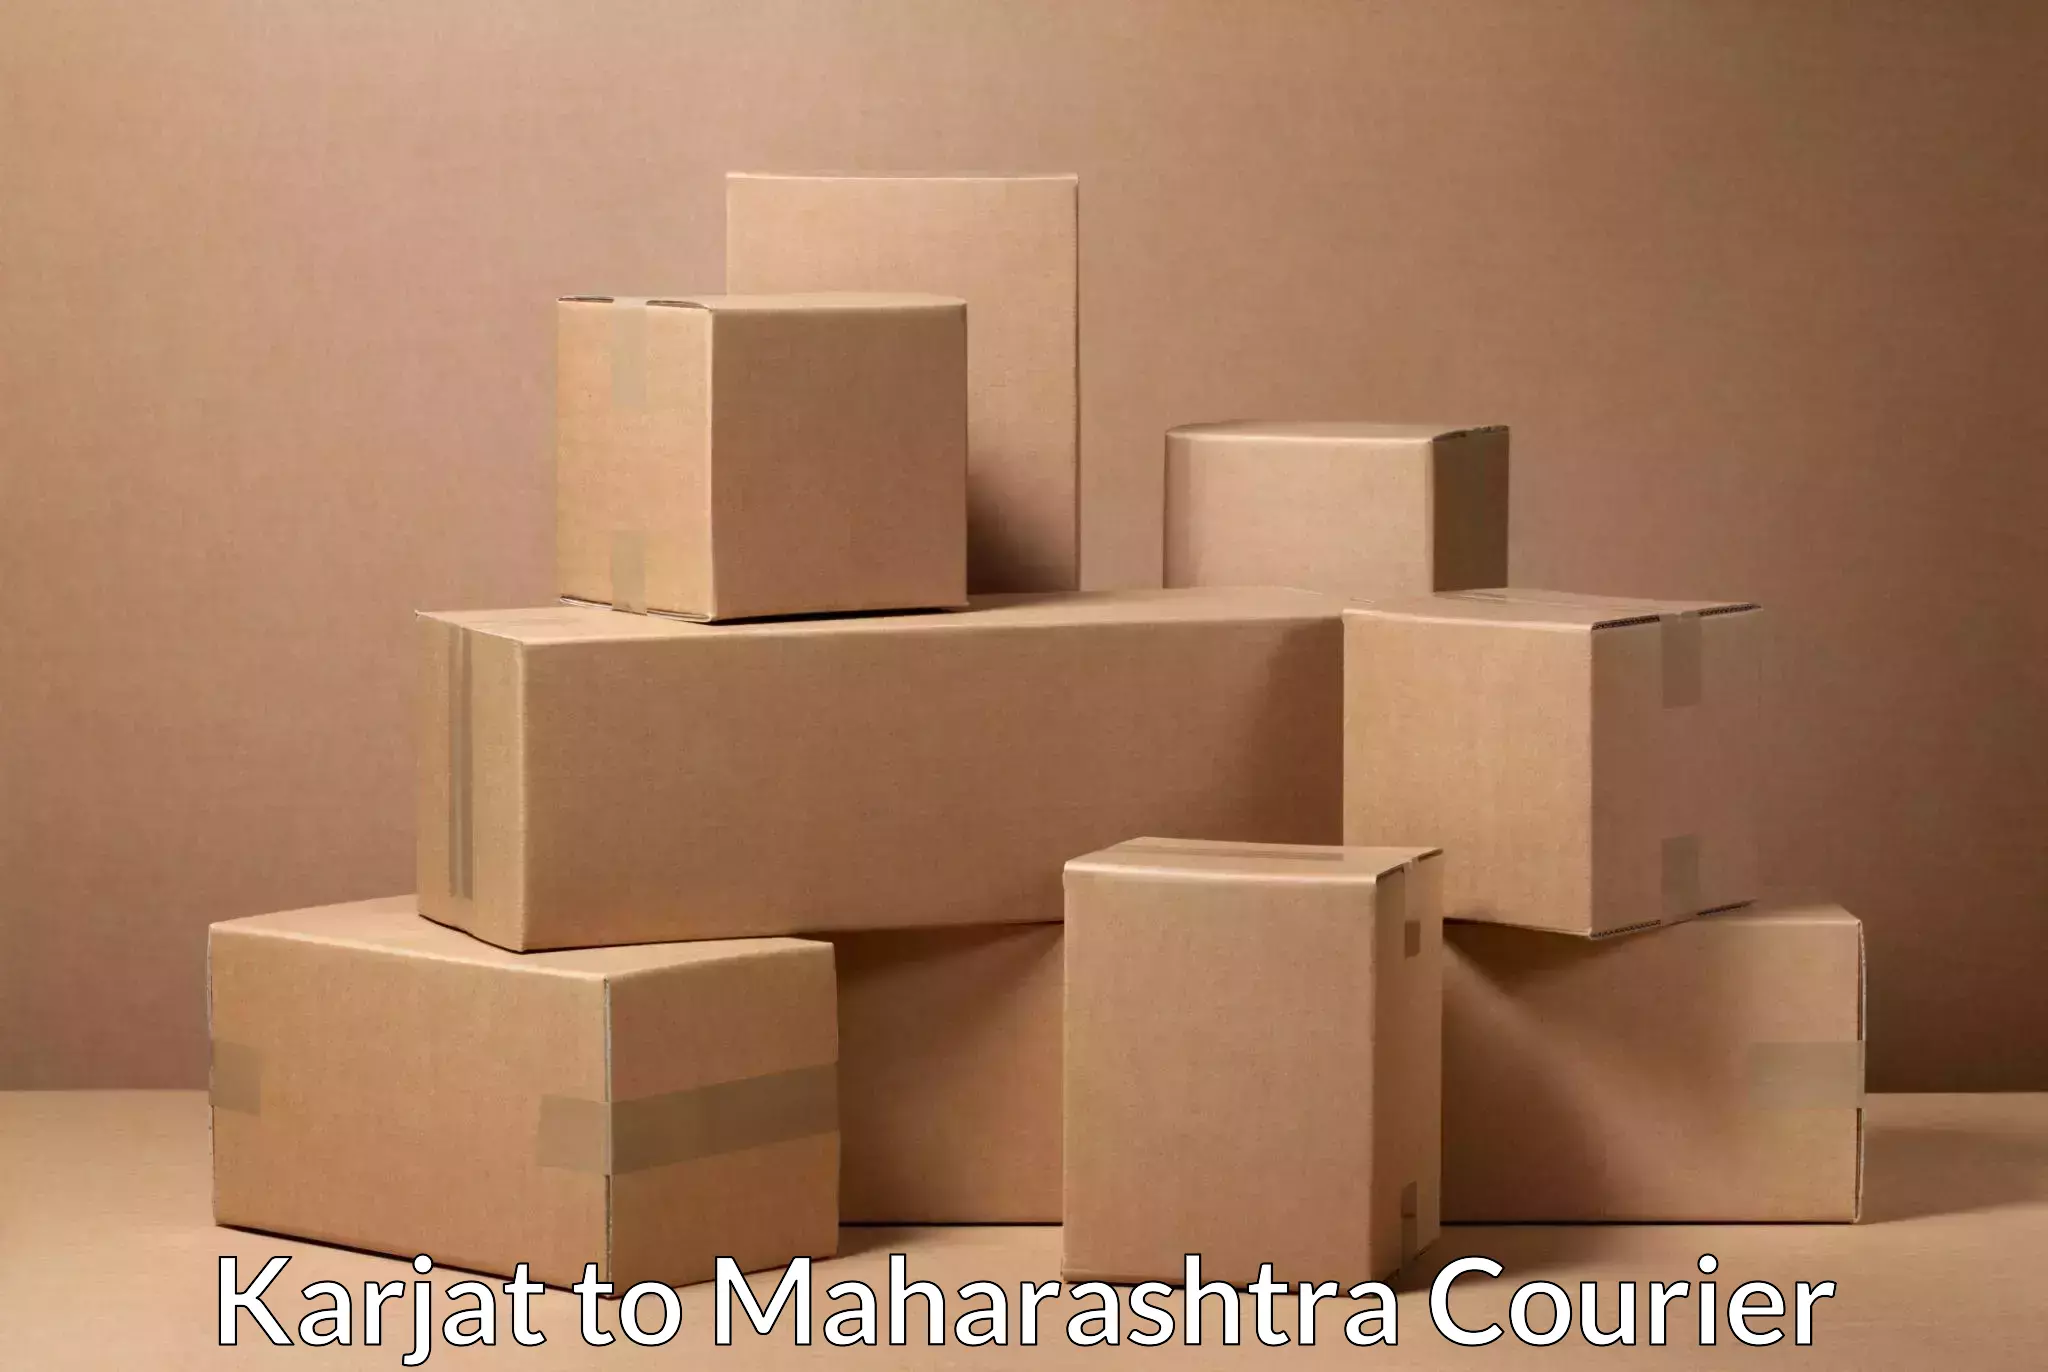 Nationwide parcel services Karjat to Maharashtra